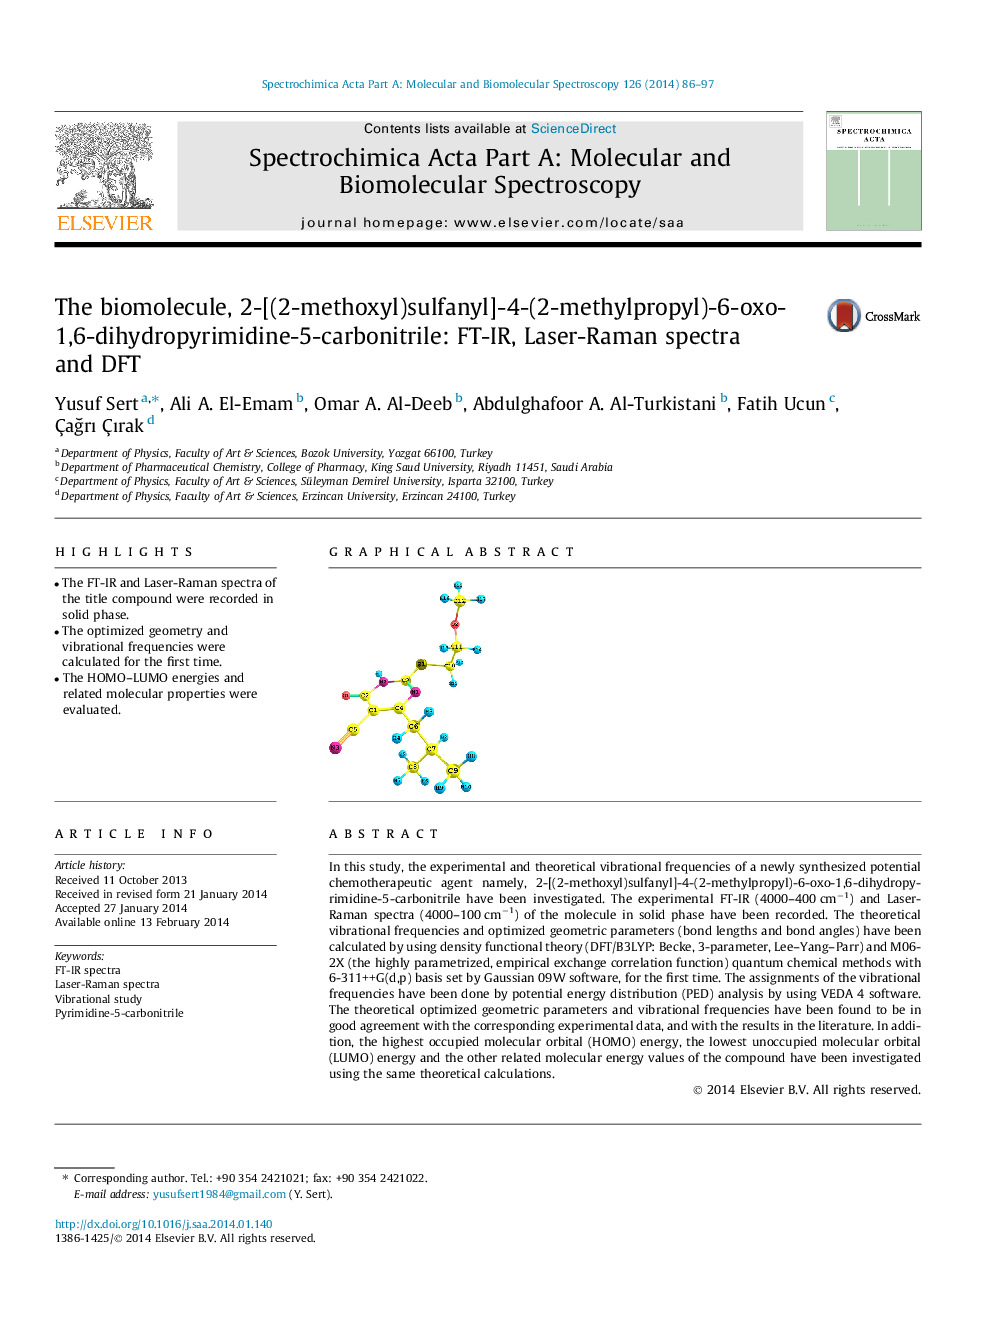 The biomolecule, 2-[(2-methoxyl)sulfanyl]-4-(2-methylpropyl)-6-oxo-1,6-dihydropyrimidine-5-carbonitrile: FT-IR, Laser-Raman spectra and DFT